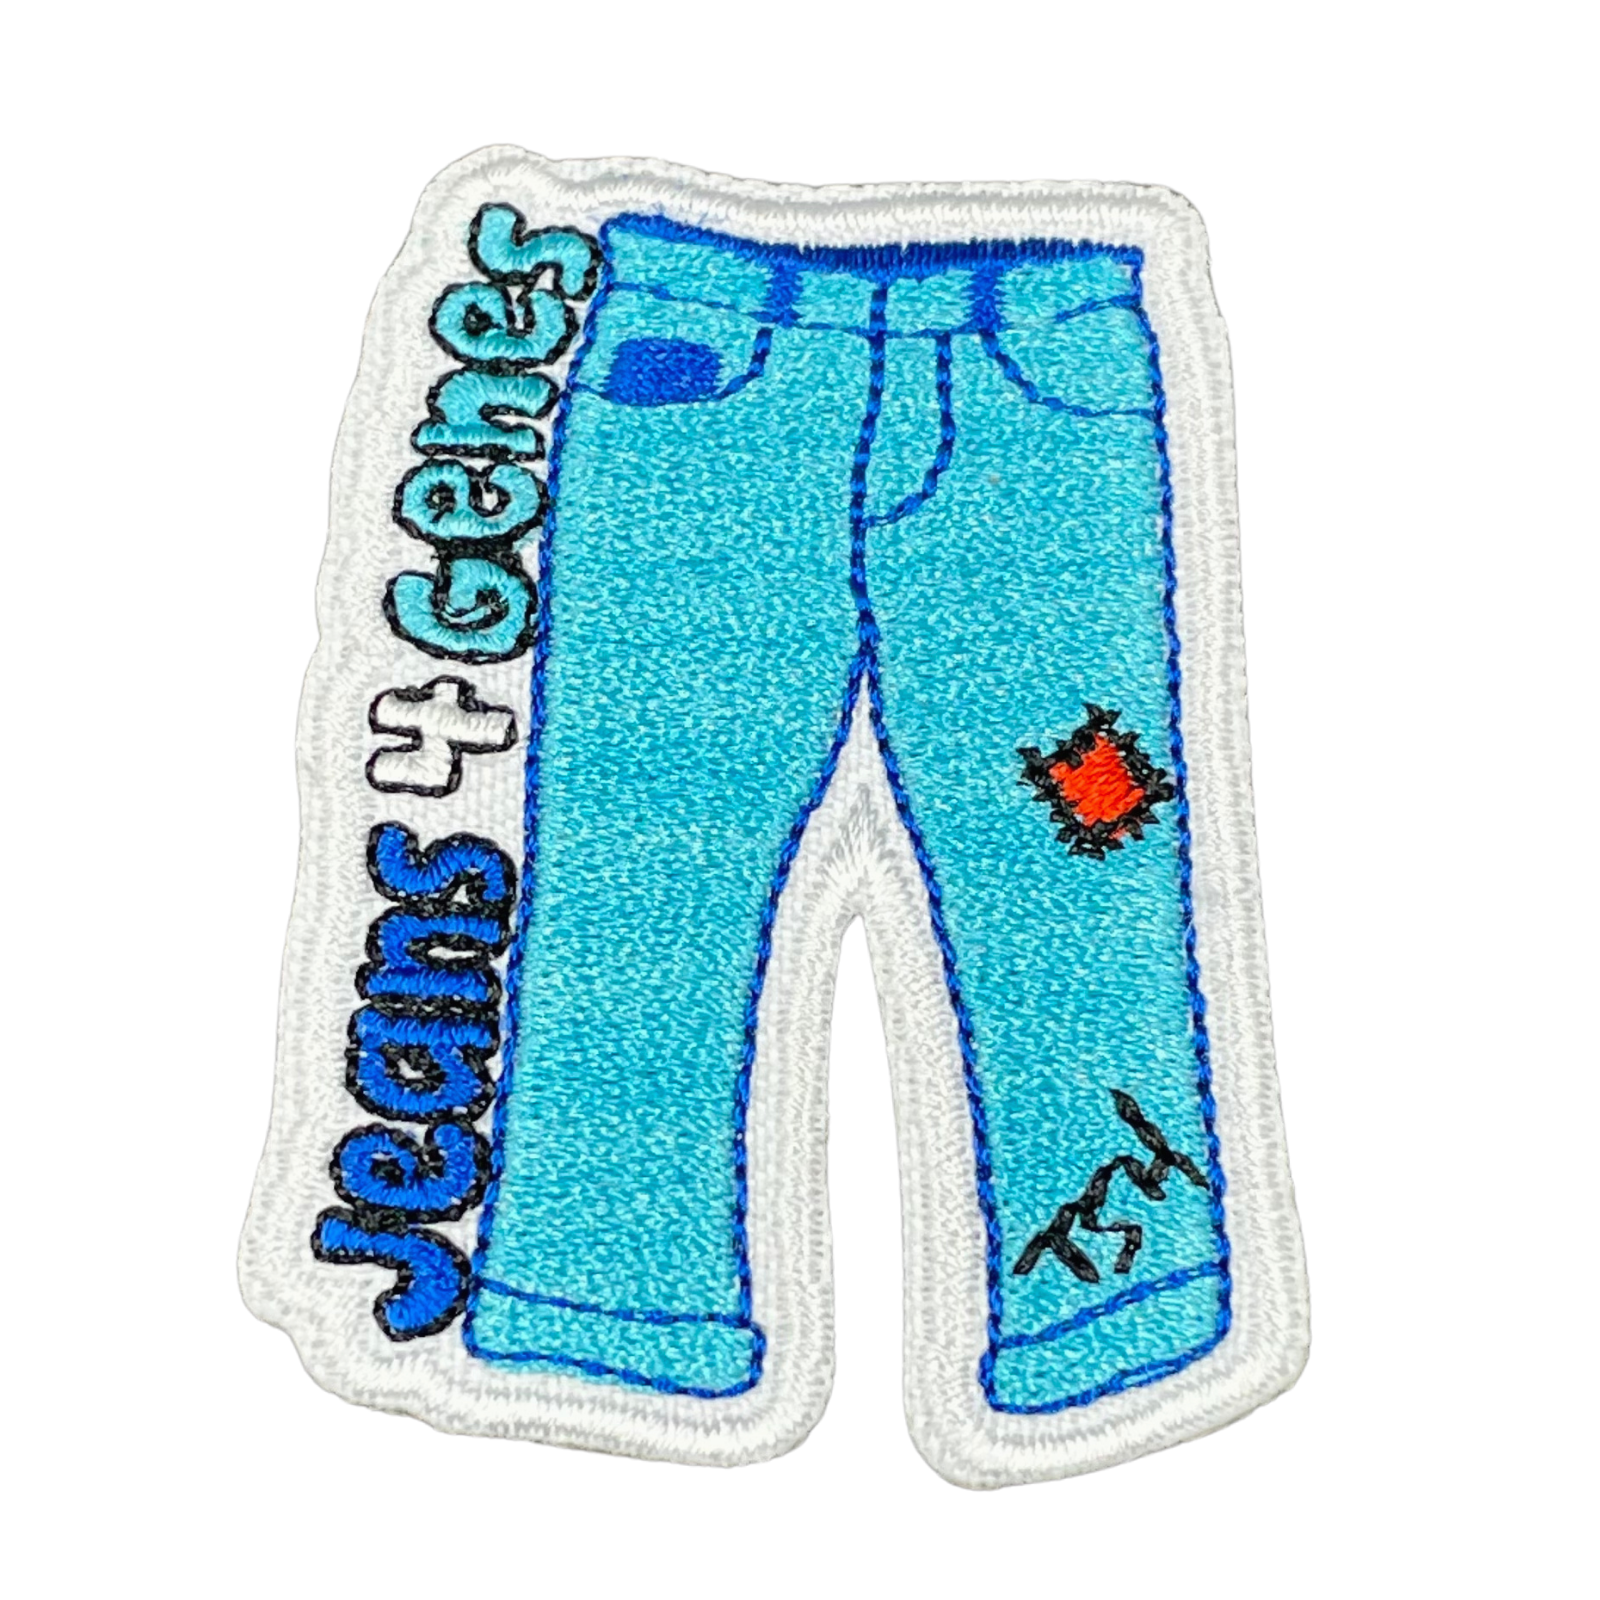 Jeans 4 Genes Patch - TinySuperheroes